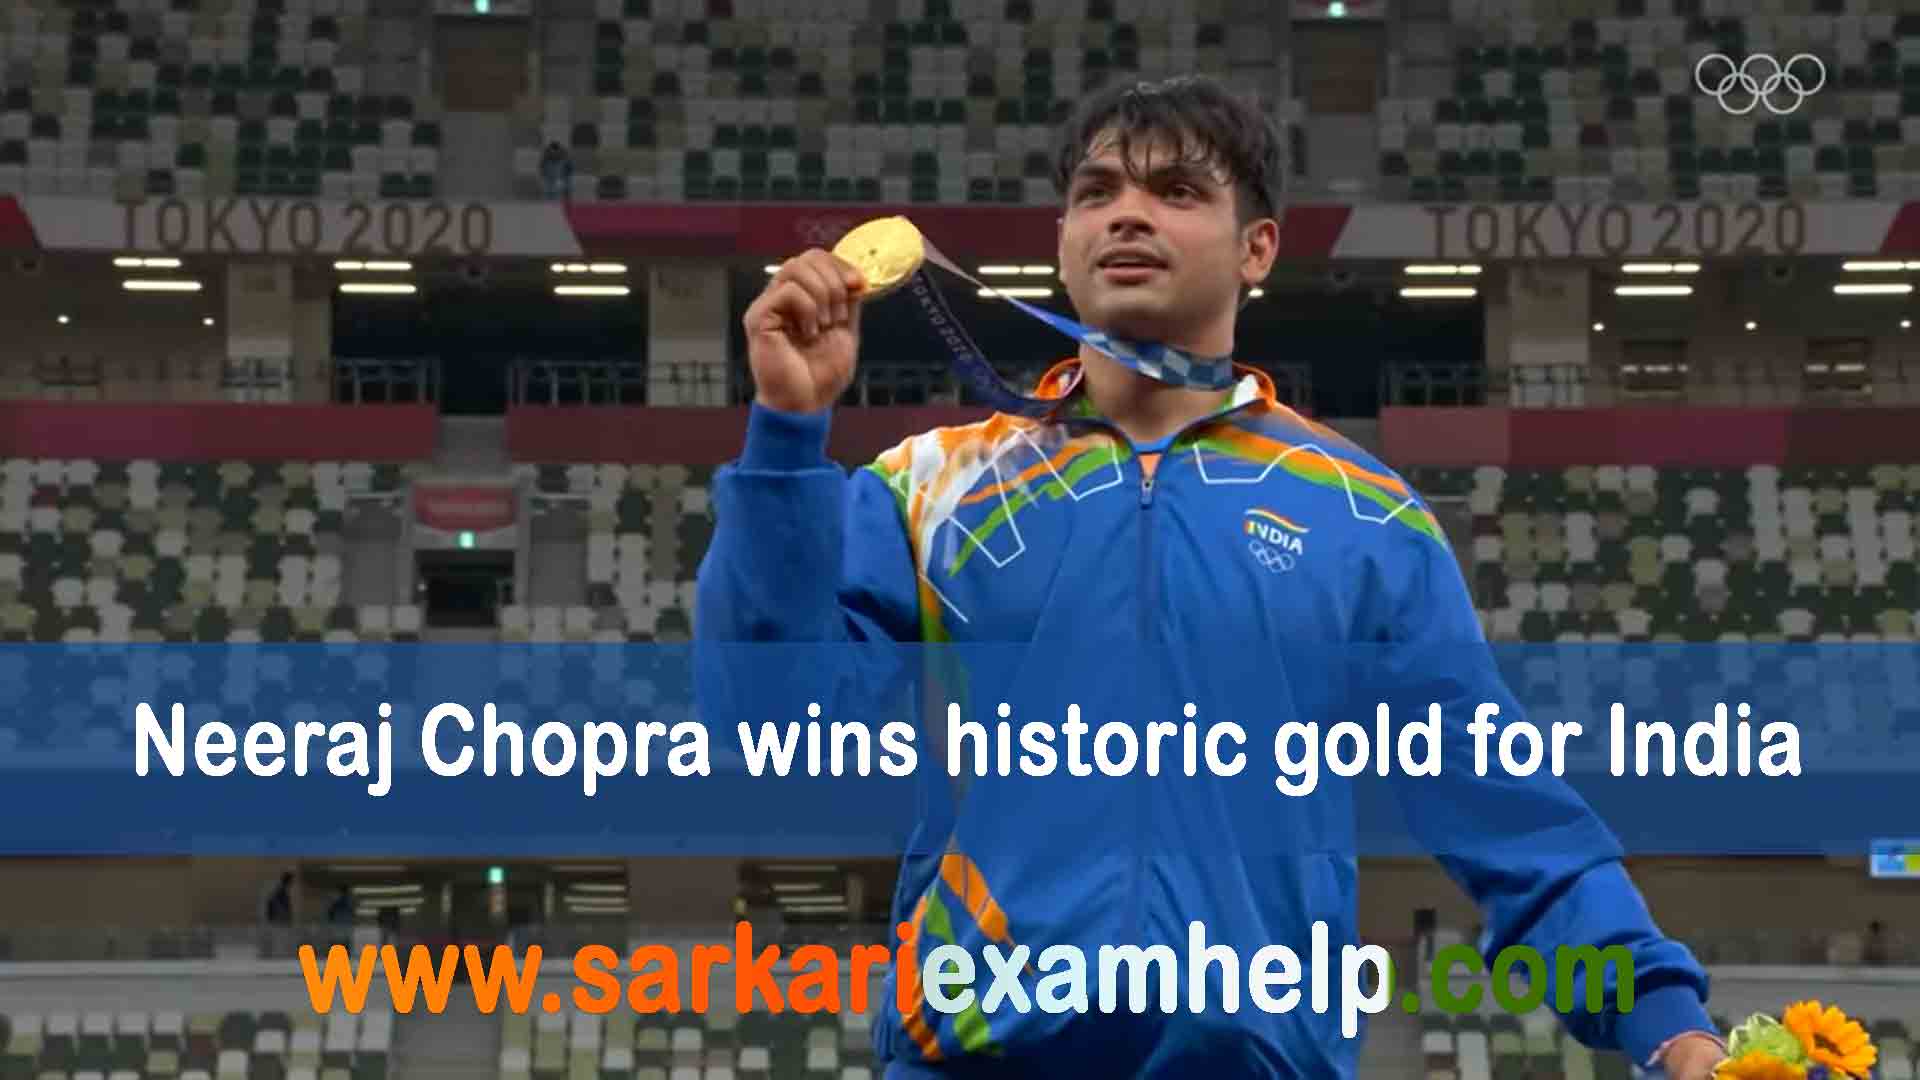 Neeraj Chopra wins historic gold for India